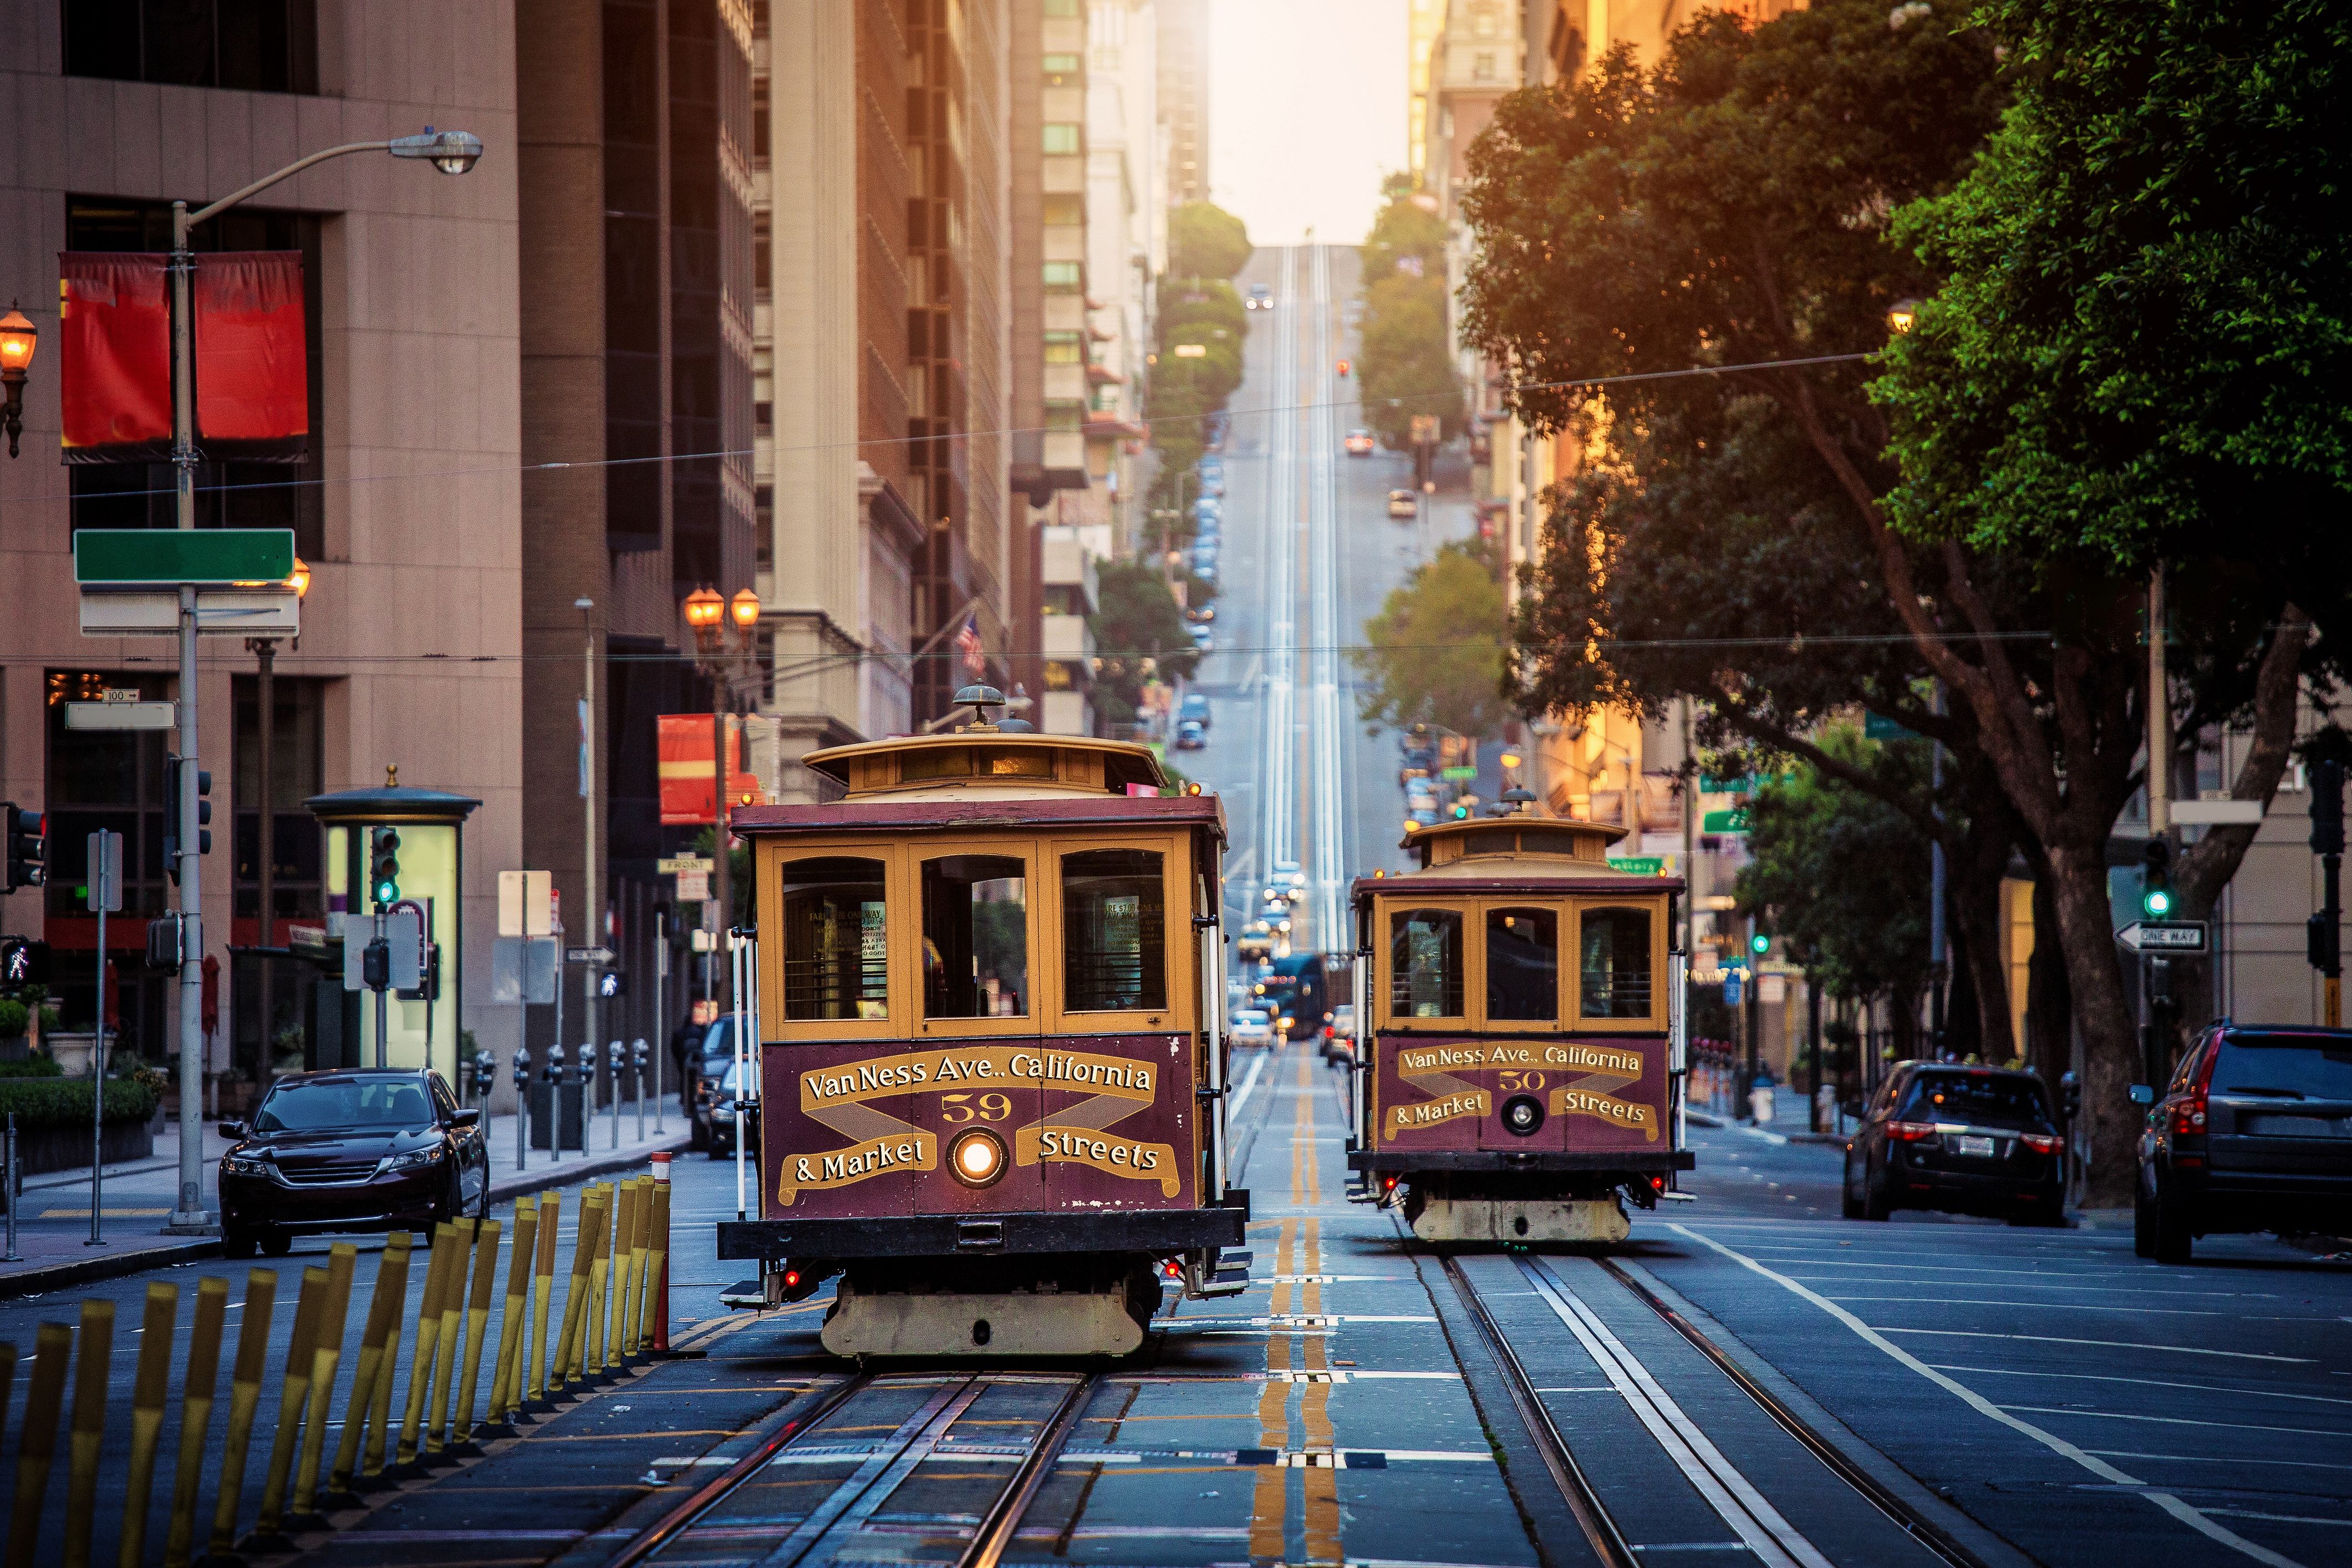 San. Сан Франциско трамвайчик. Трамвайная улица в Сан Франциско. Старинные трамваи Сан Франциско. Сан Францисский трамвай.